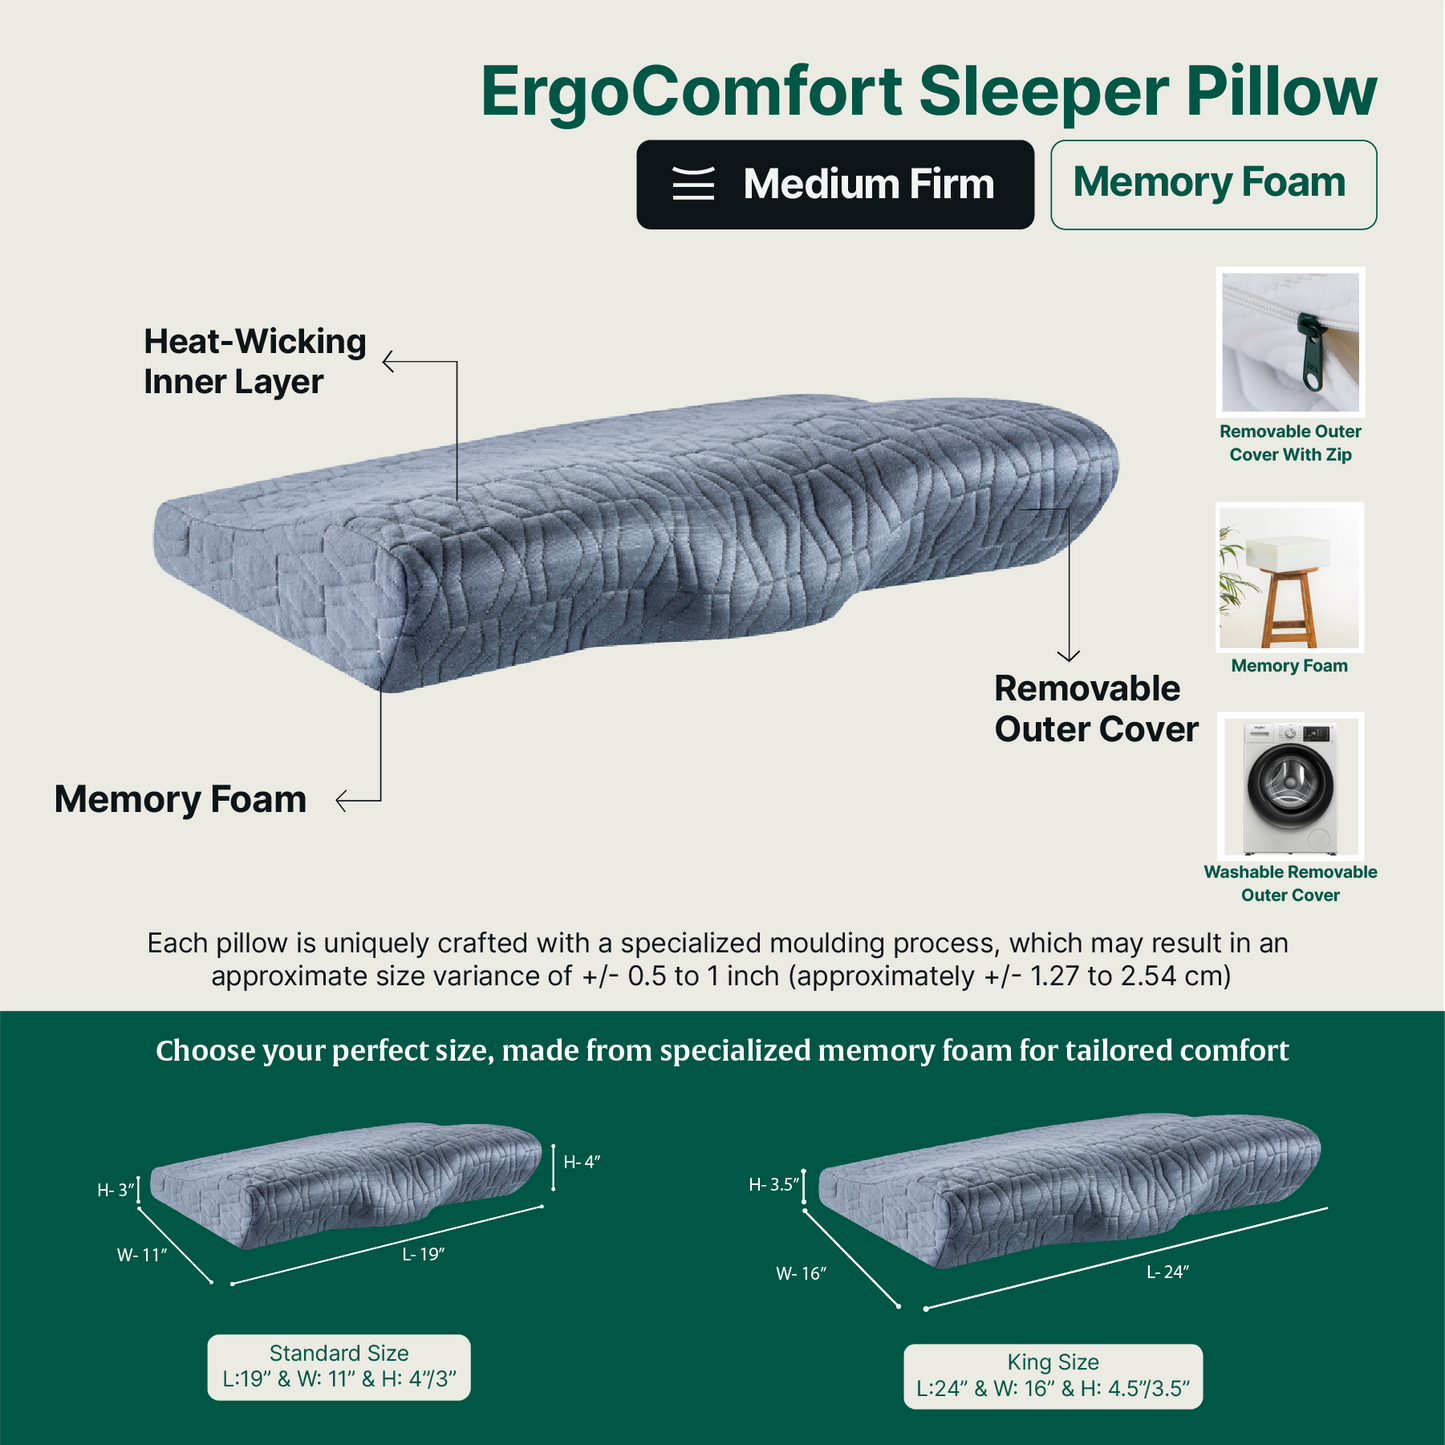 ErgoComfort Sleeper Pillow